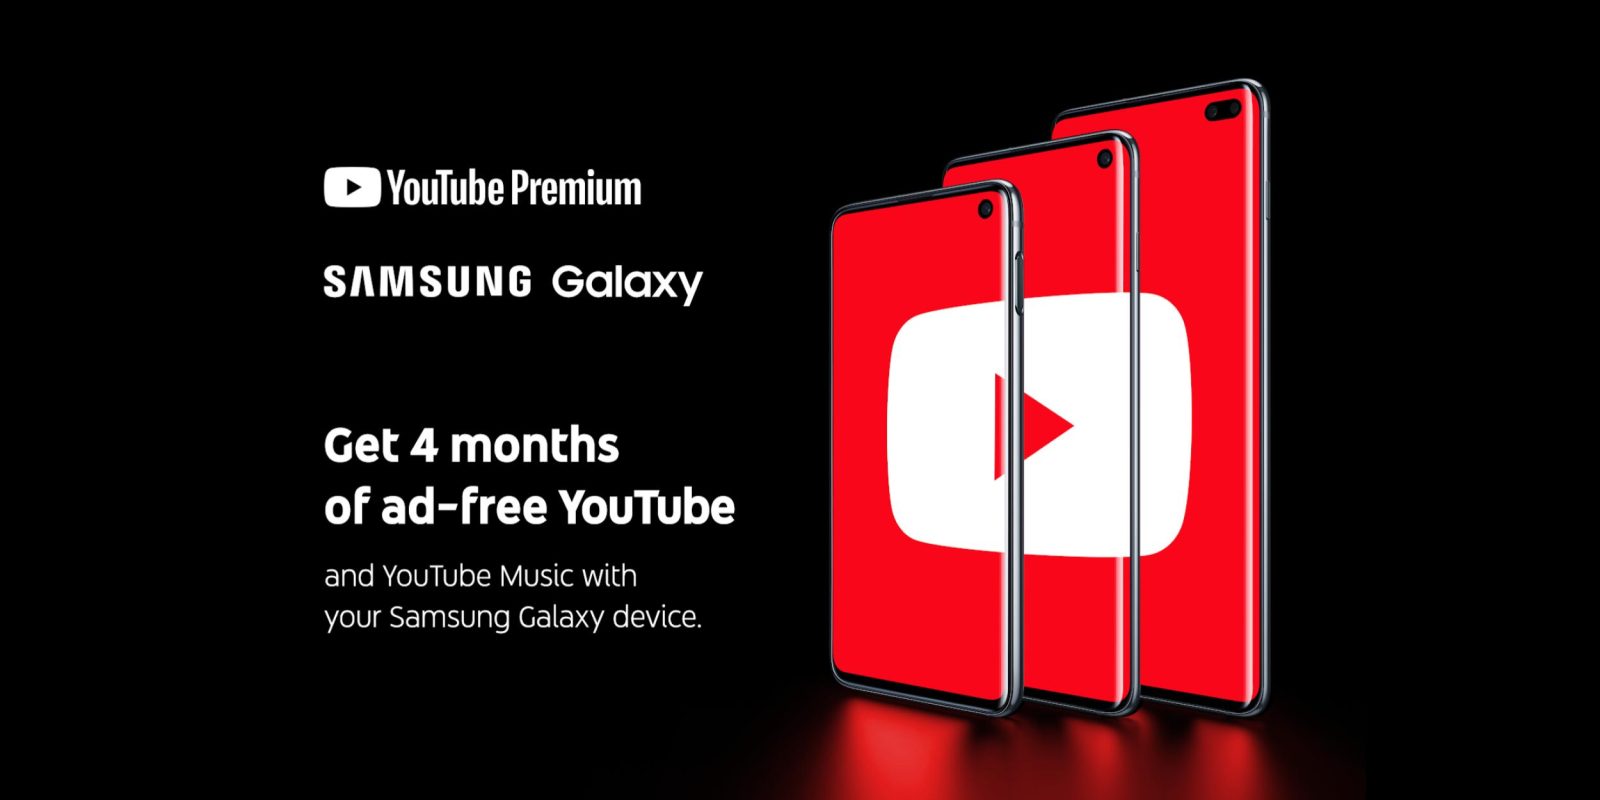 YouTube Premium Galaxy S10 offer